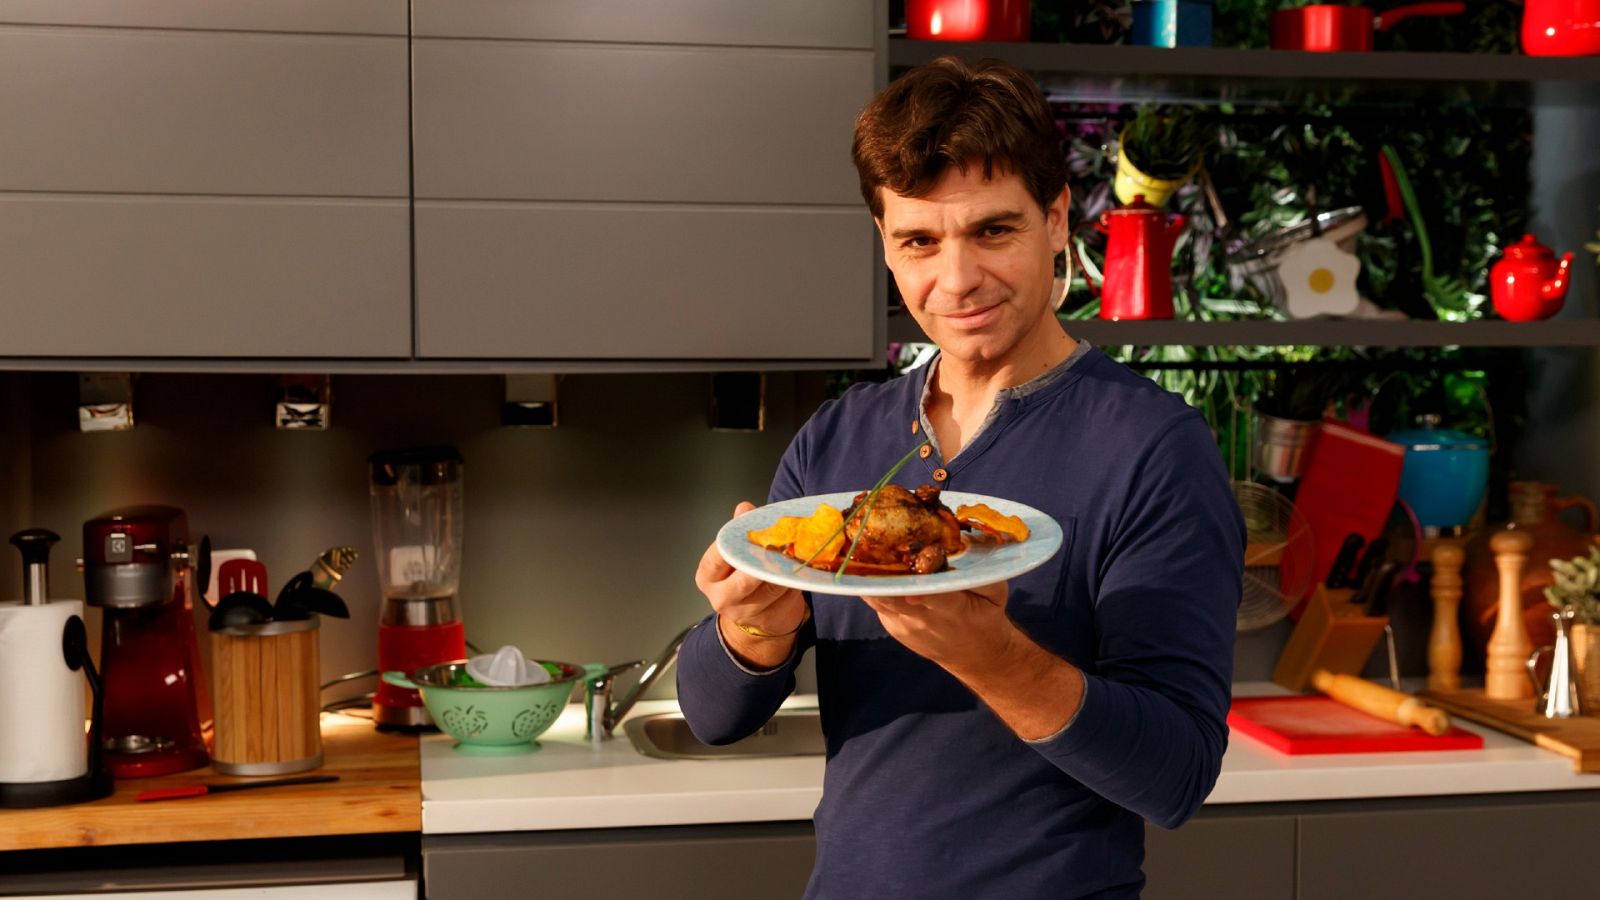 Sergio cocina - Receta de pollo asado con castañas - Ver ahora